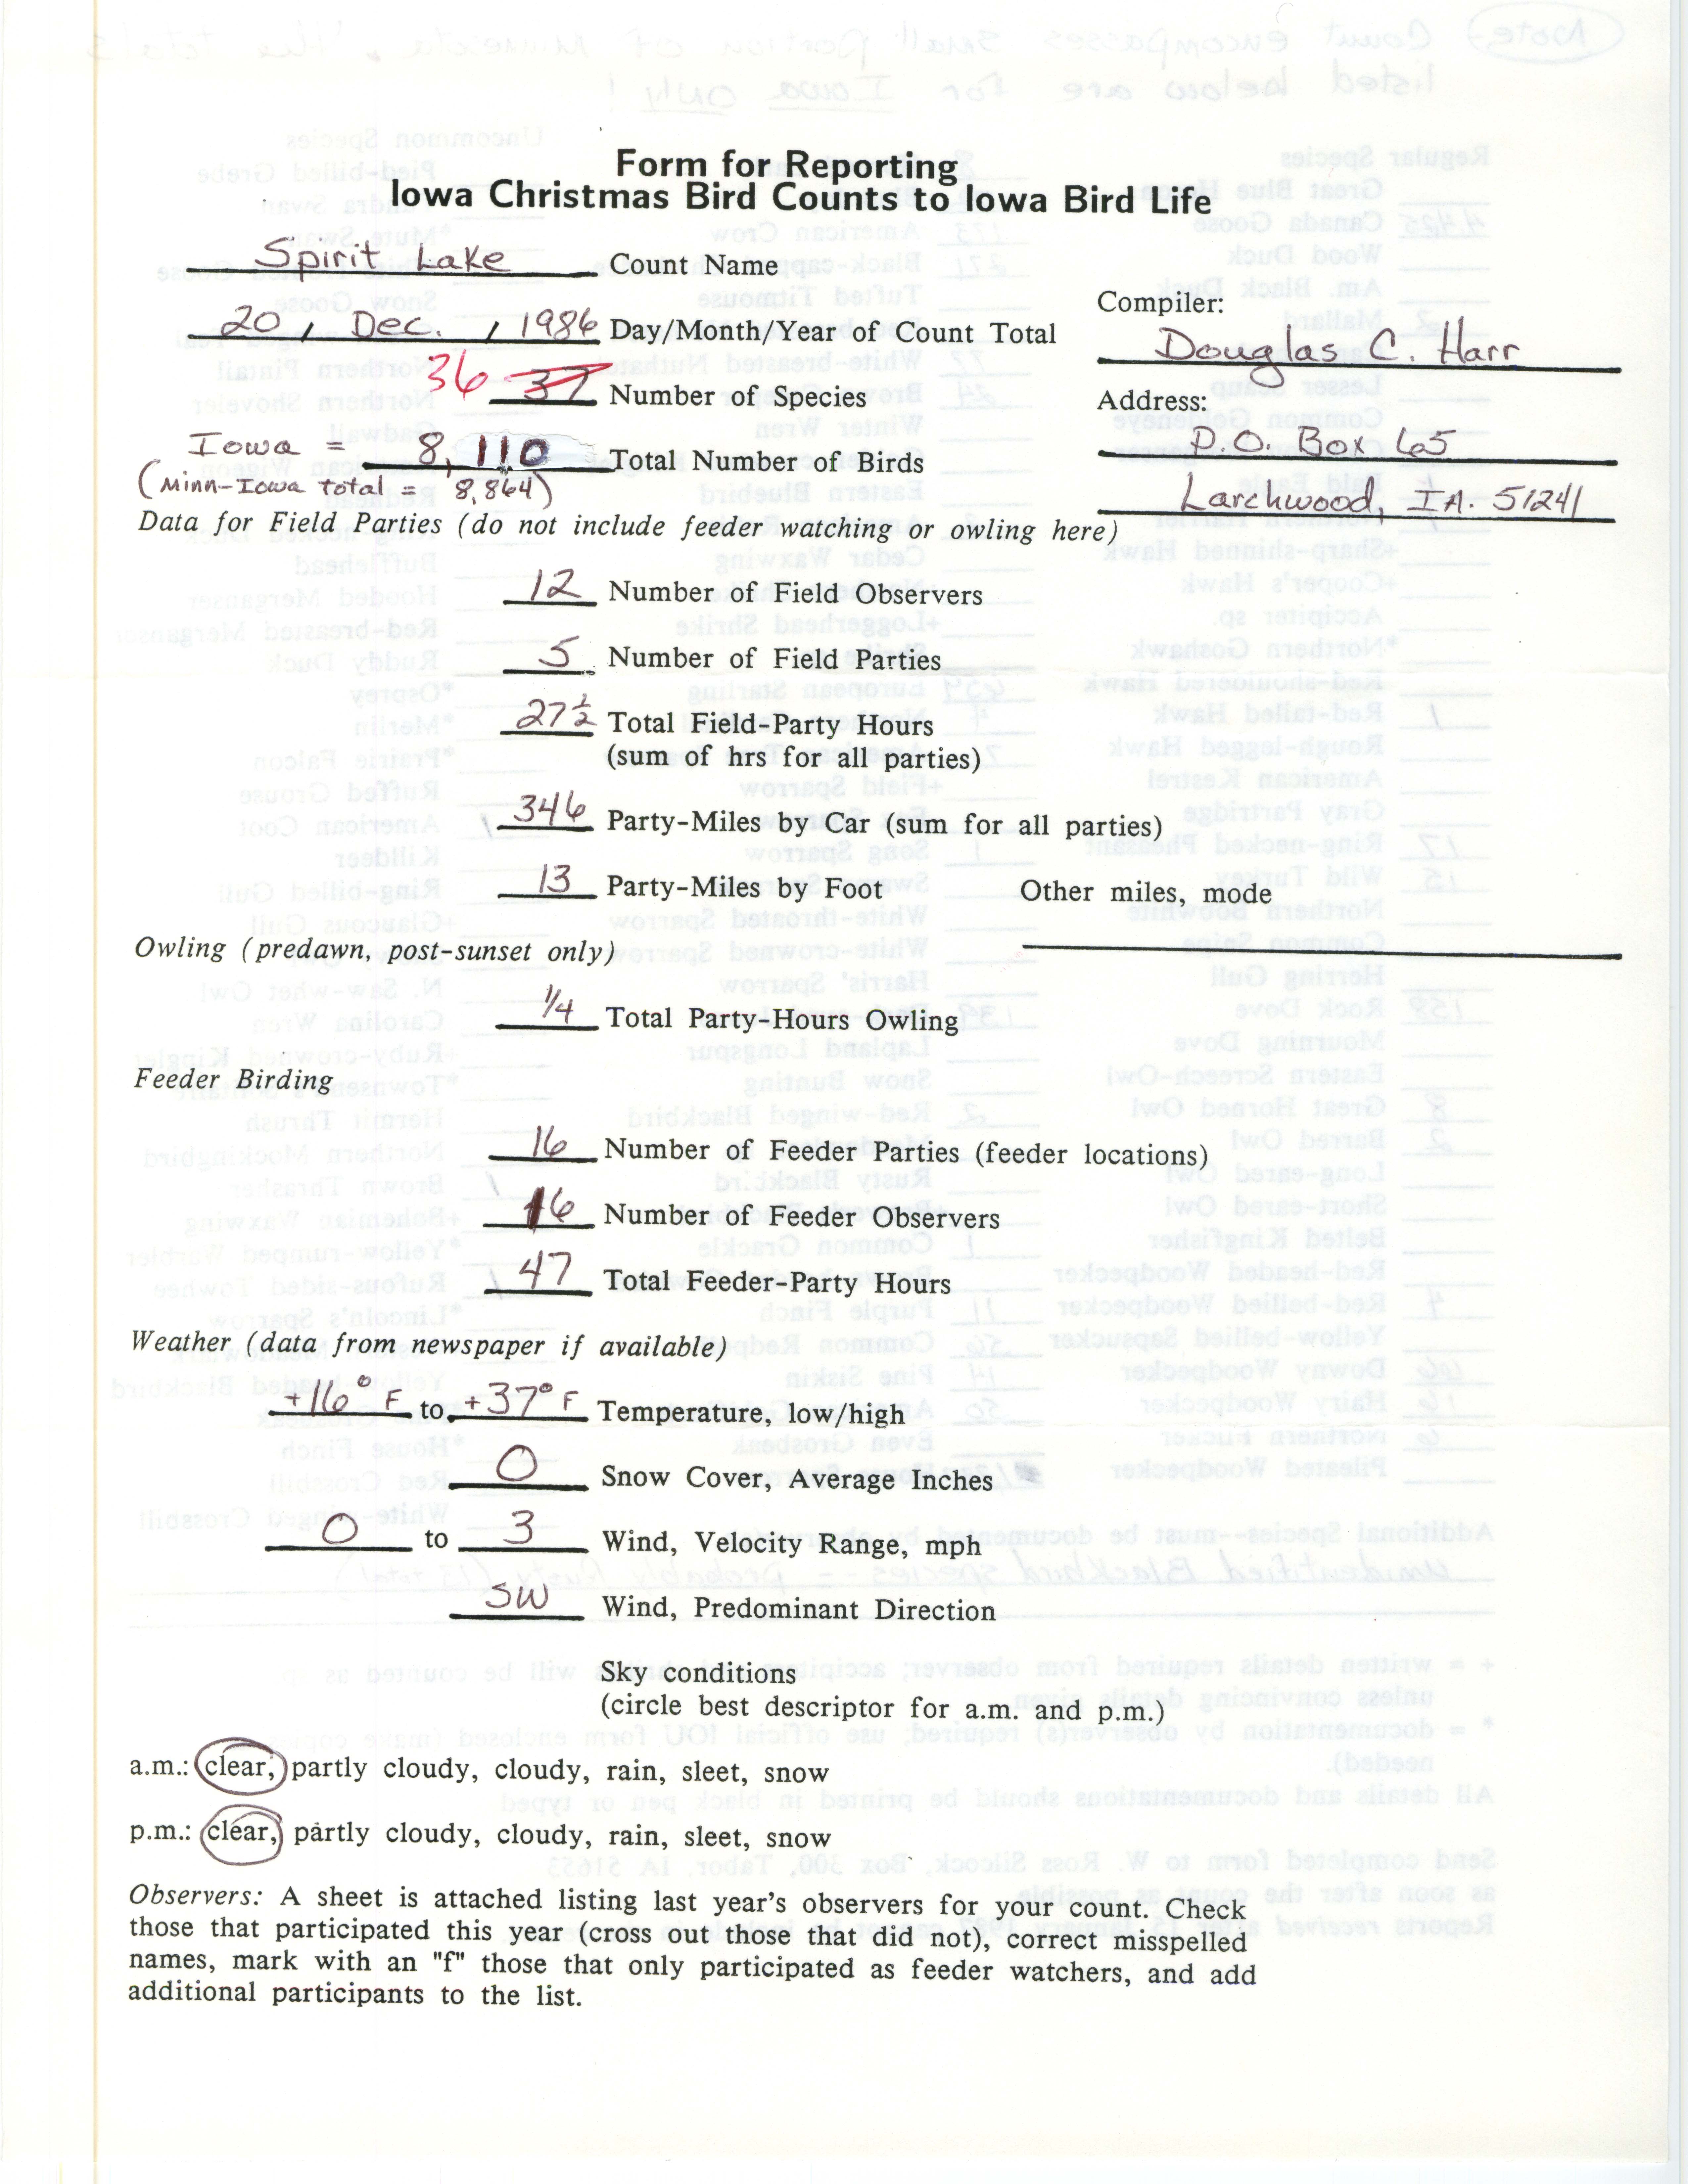 Form for reporting Iowa Christmas bird counts to Iowa Bird Life, Douglas C. Harr, December 20, 1986